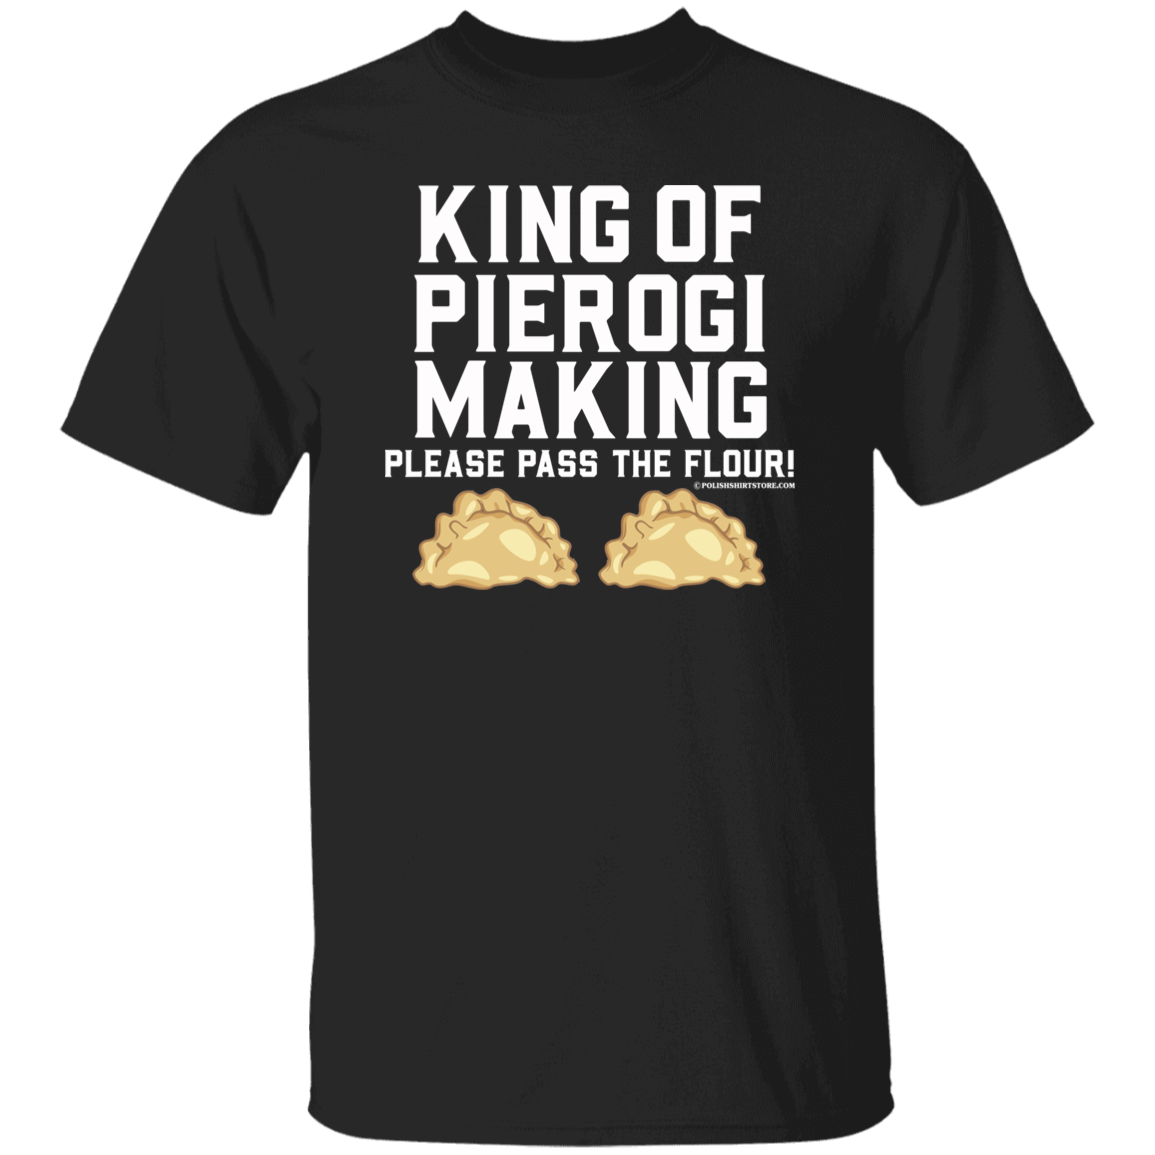 King Of Pierogi Making - Please Pass The Flour Apparel CustomCat G500 5.3 oz. T-Shirt Black S